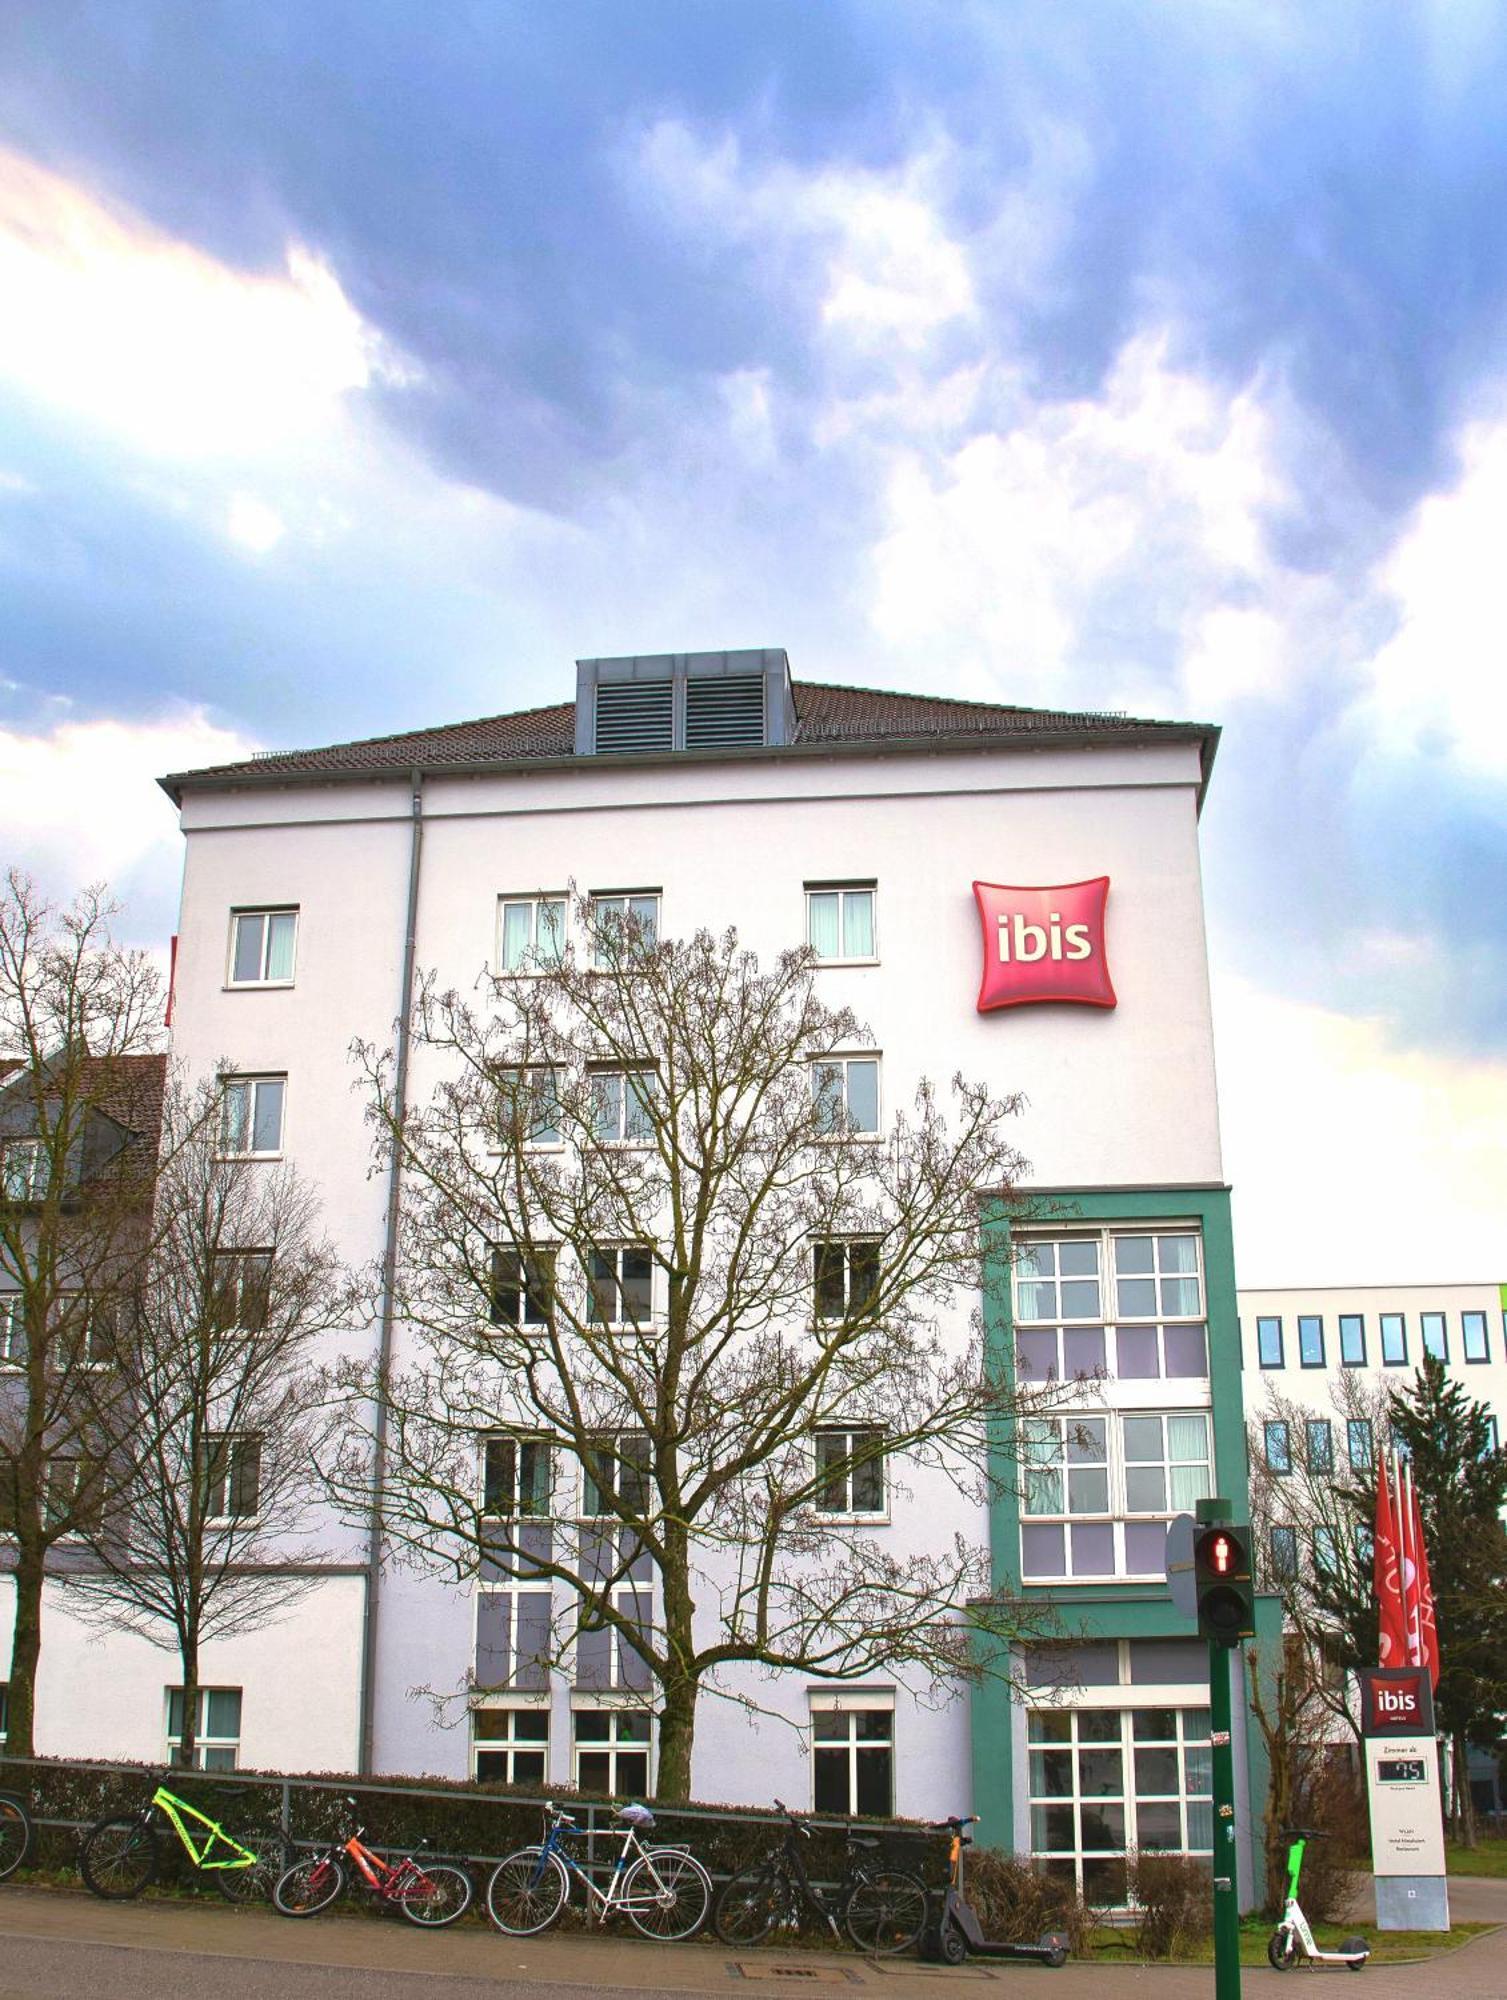 Ibis Hotel Regensburg City Exterior photo